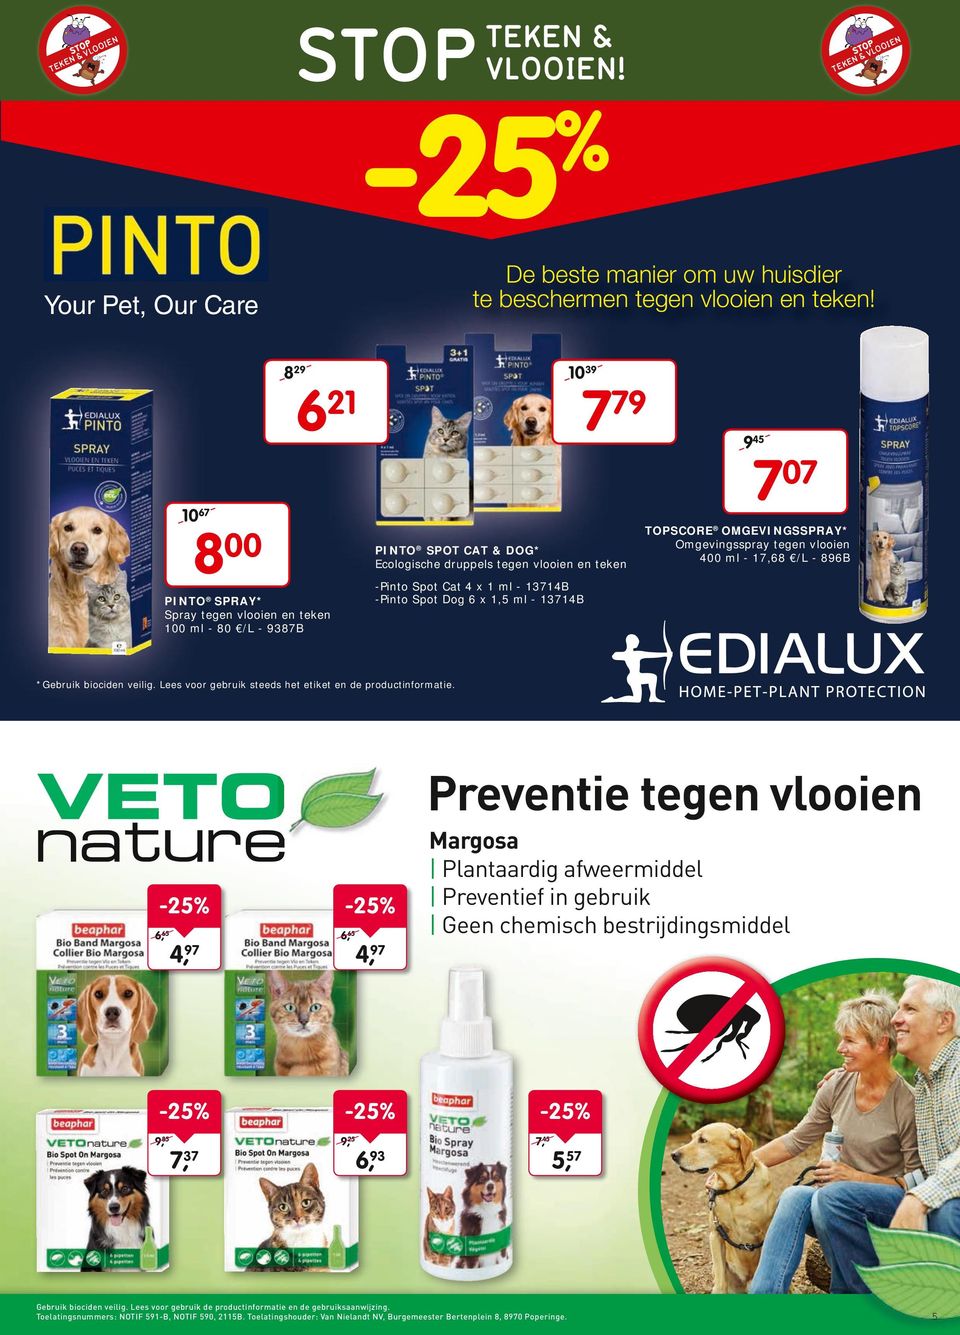 -Pinto Spot Cat 4 x ml - 374B -Pinto Spot Dog 6 x,5 ml - 374B PINO SPRY Spray tegen vlooien en teken 00 ml - 80 /L - 9387B Gebruik biocin veilig.